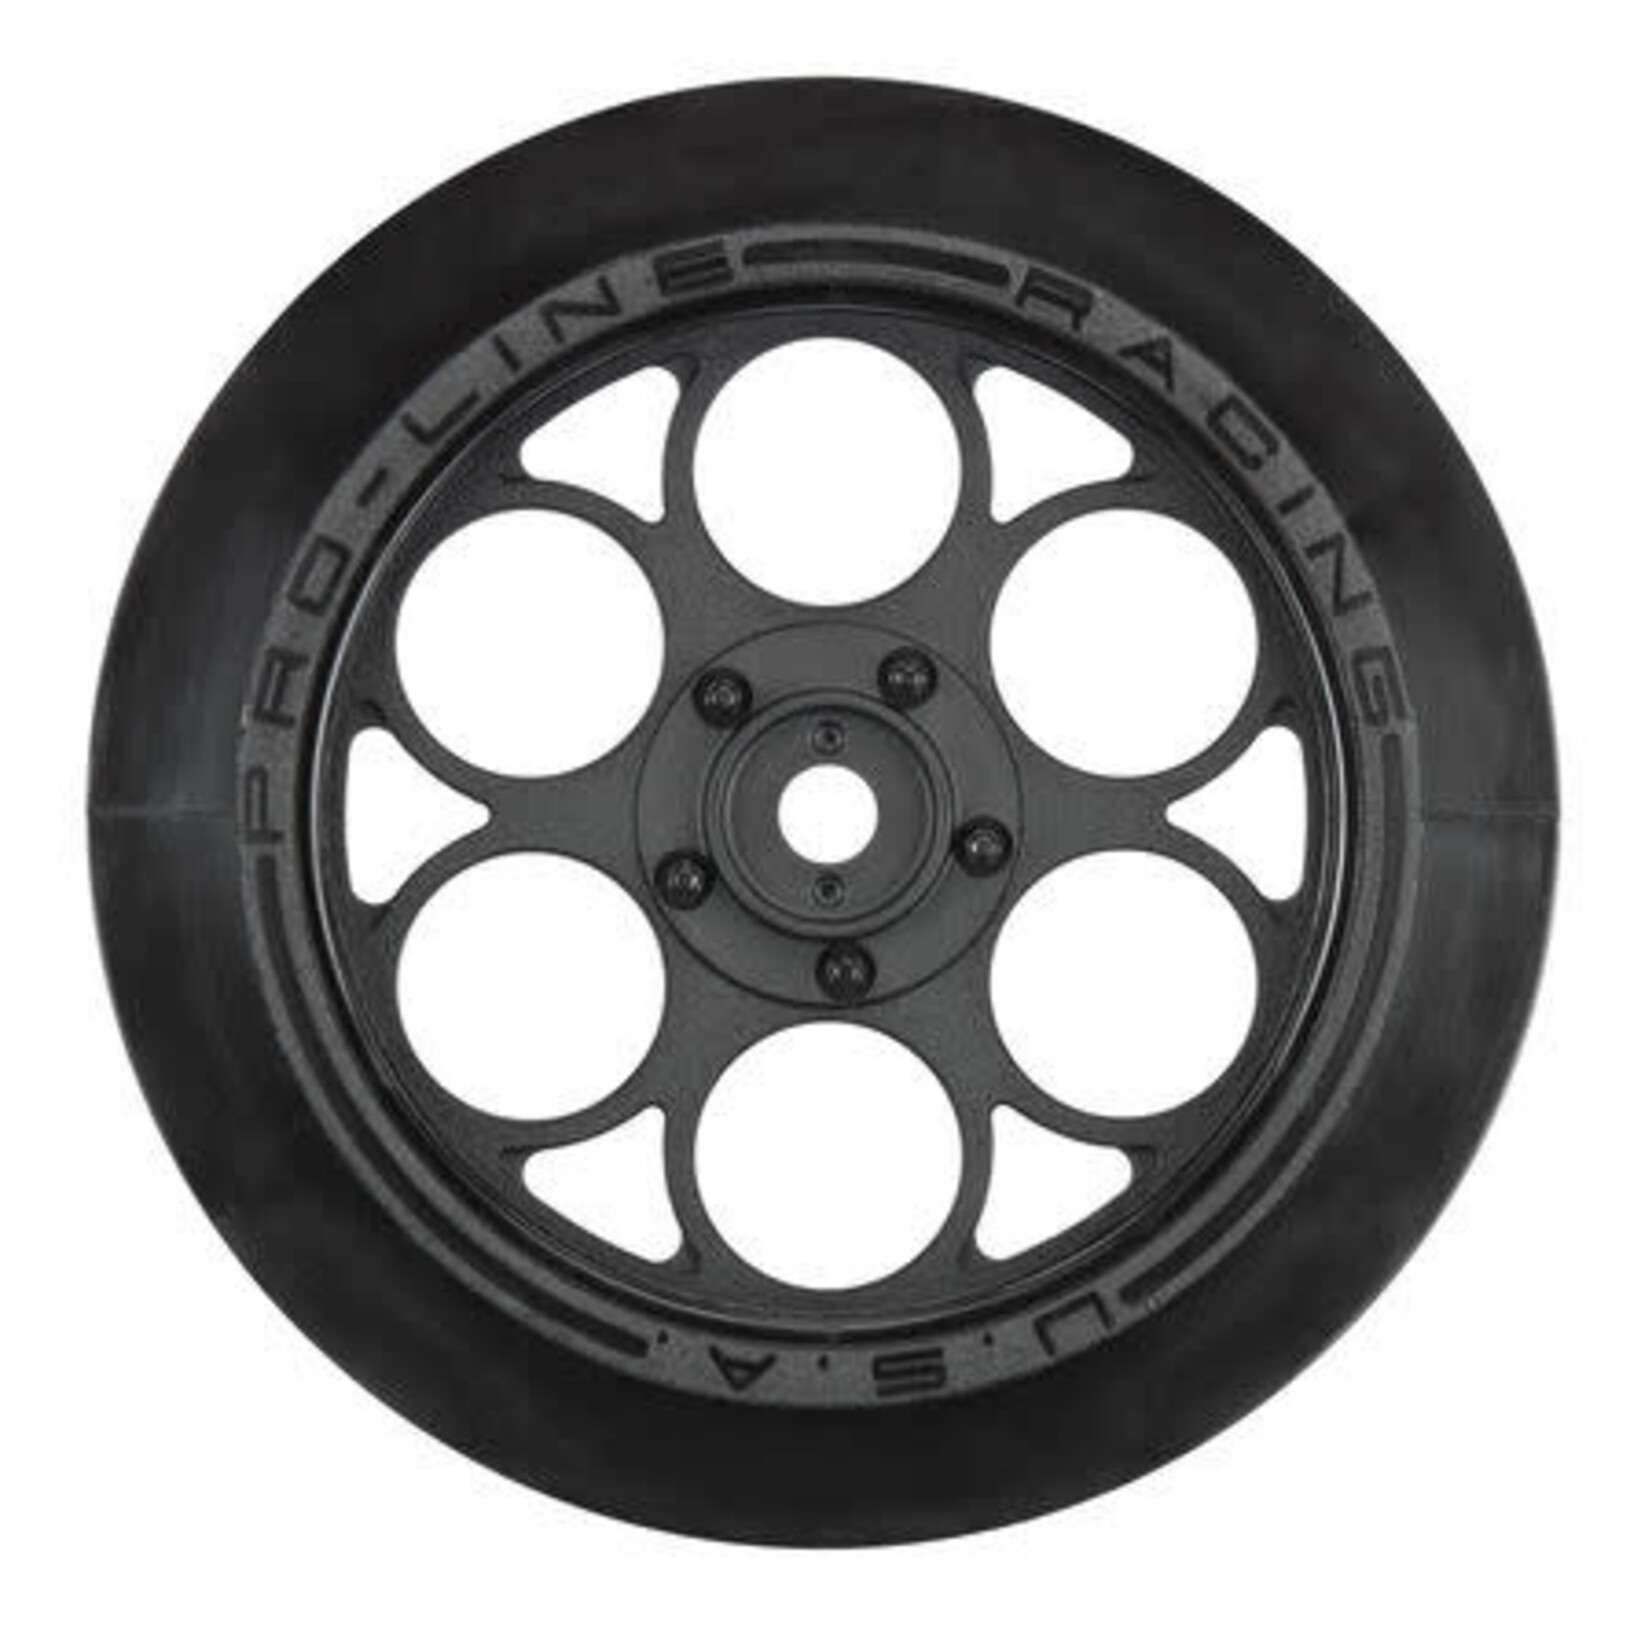 Pro-Line Showtime Front Runner 2.2/2.7 Black Font Drag Wheels